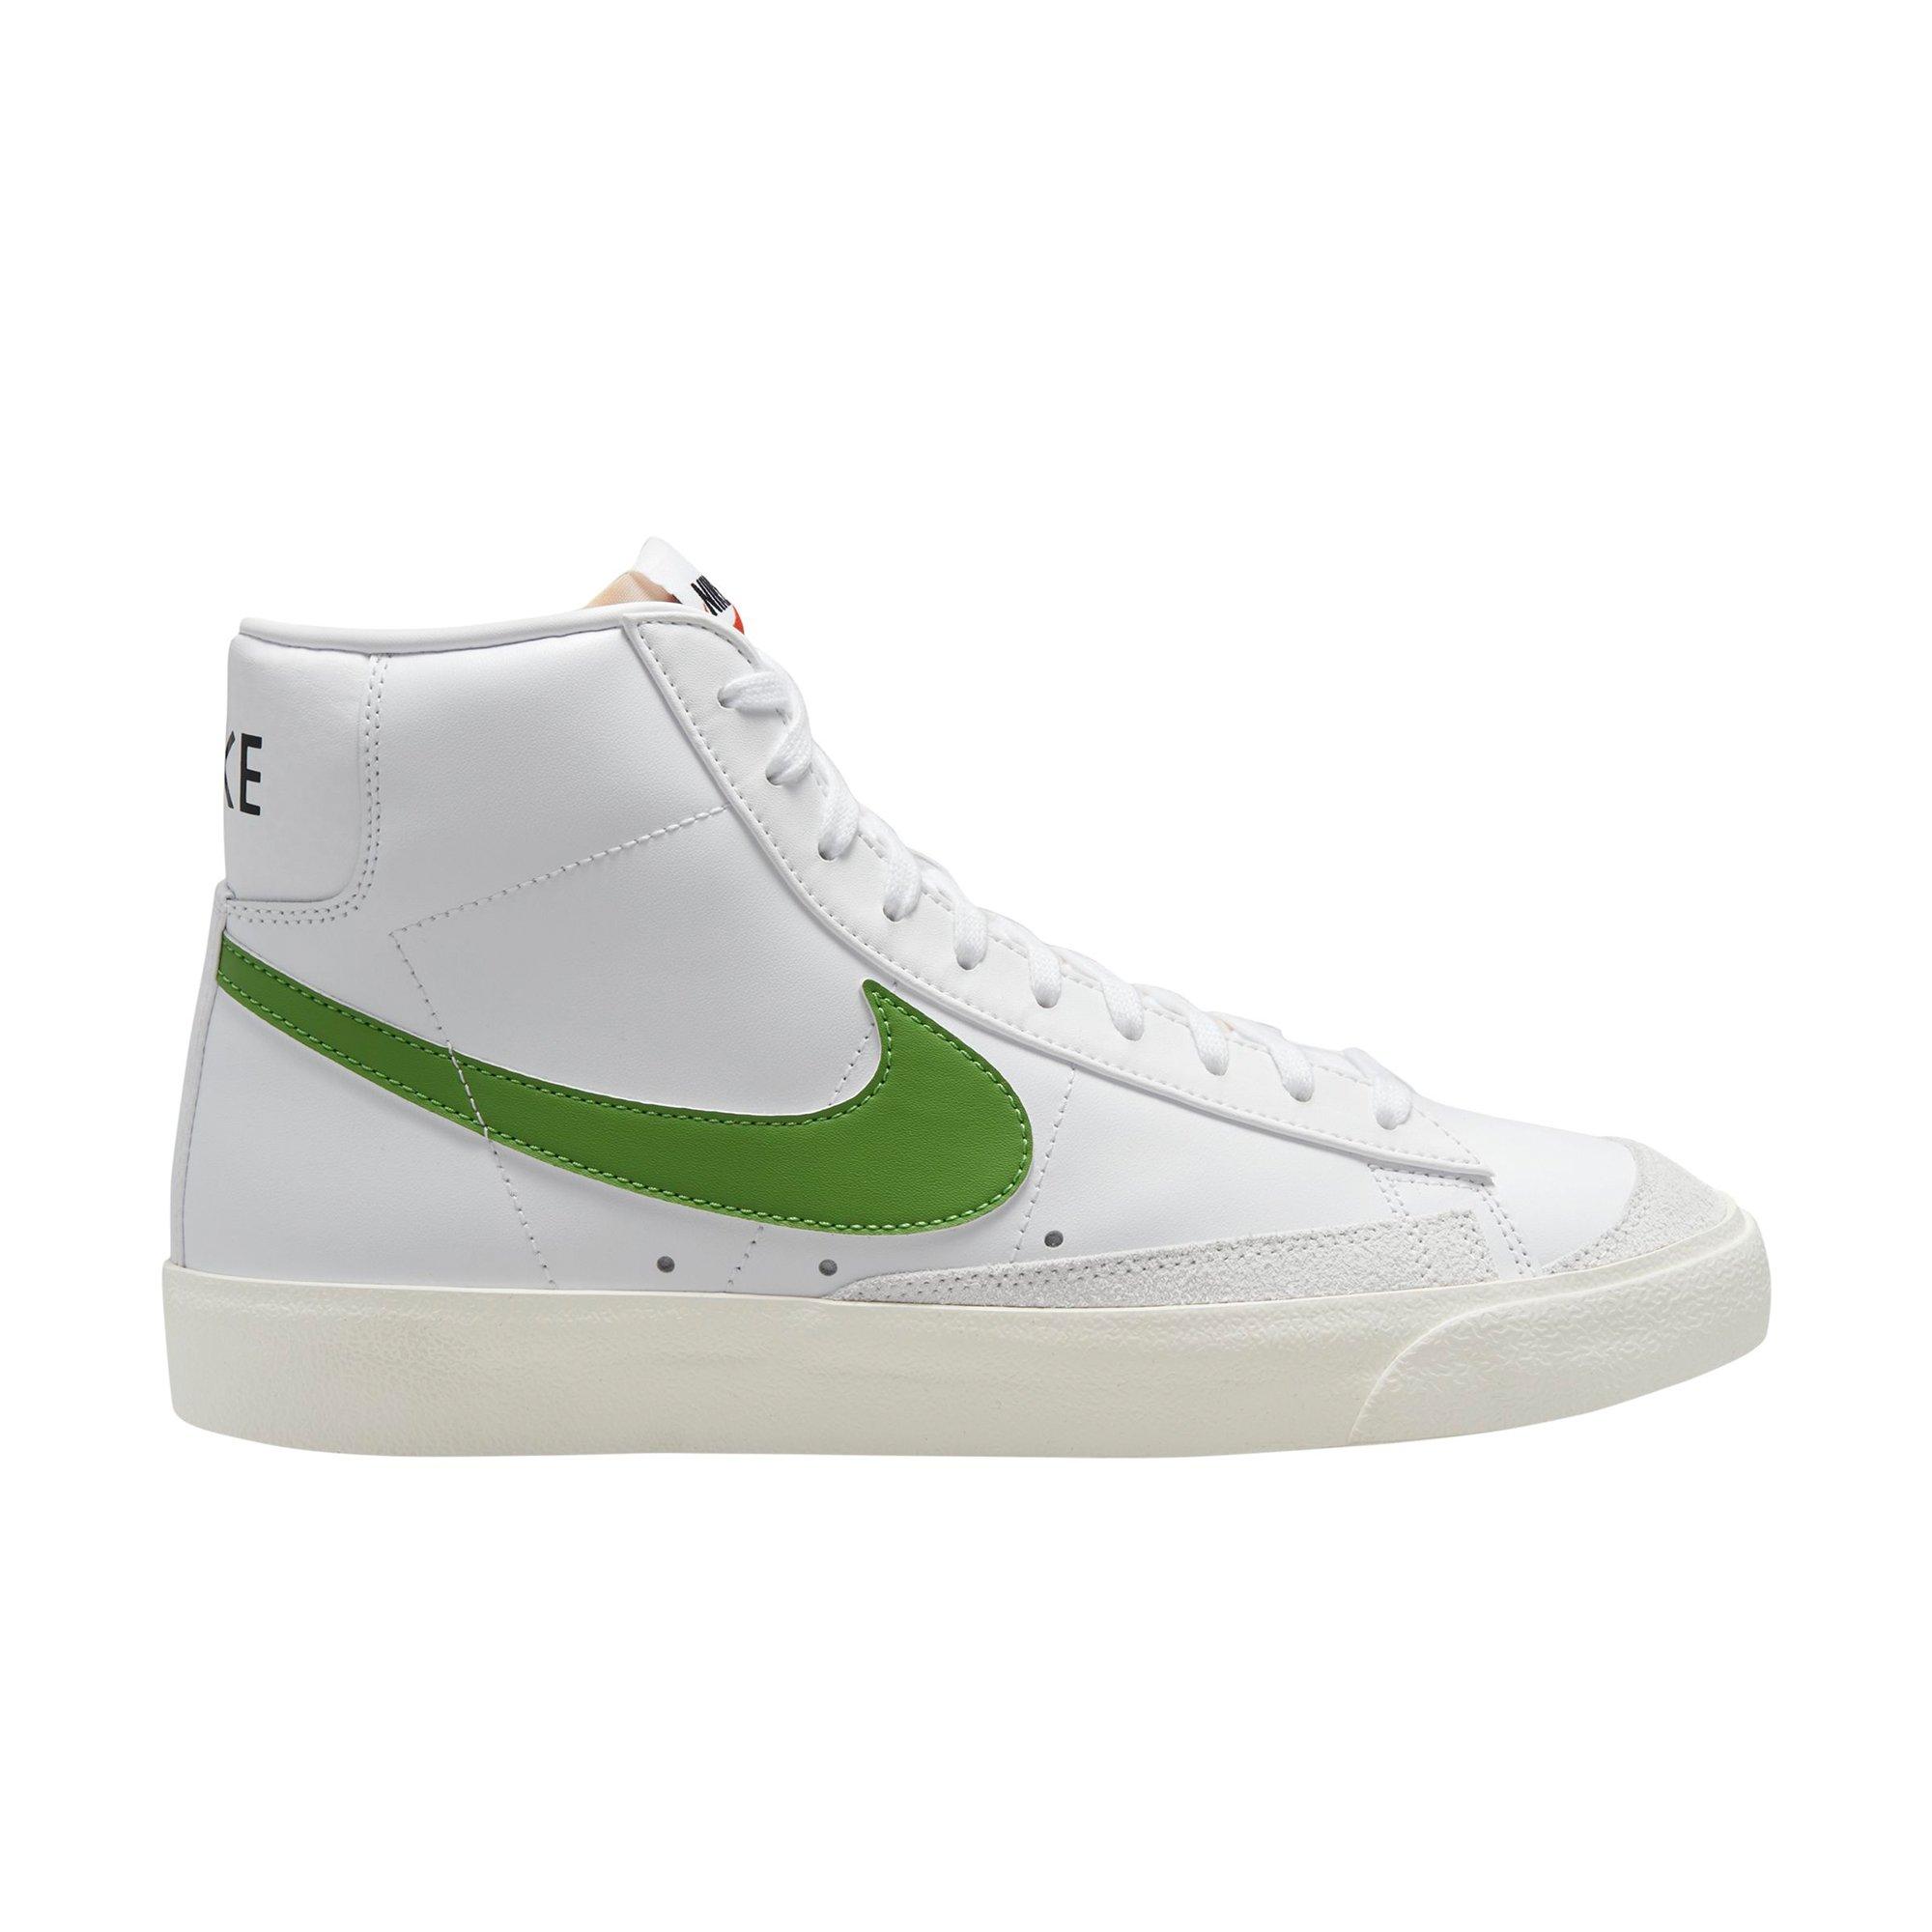 Nike Blazer Mid '77 "White/Chlorophyll/Black" Men's Shoe